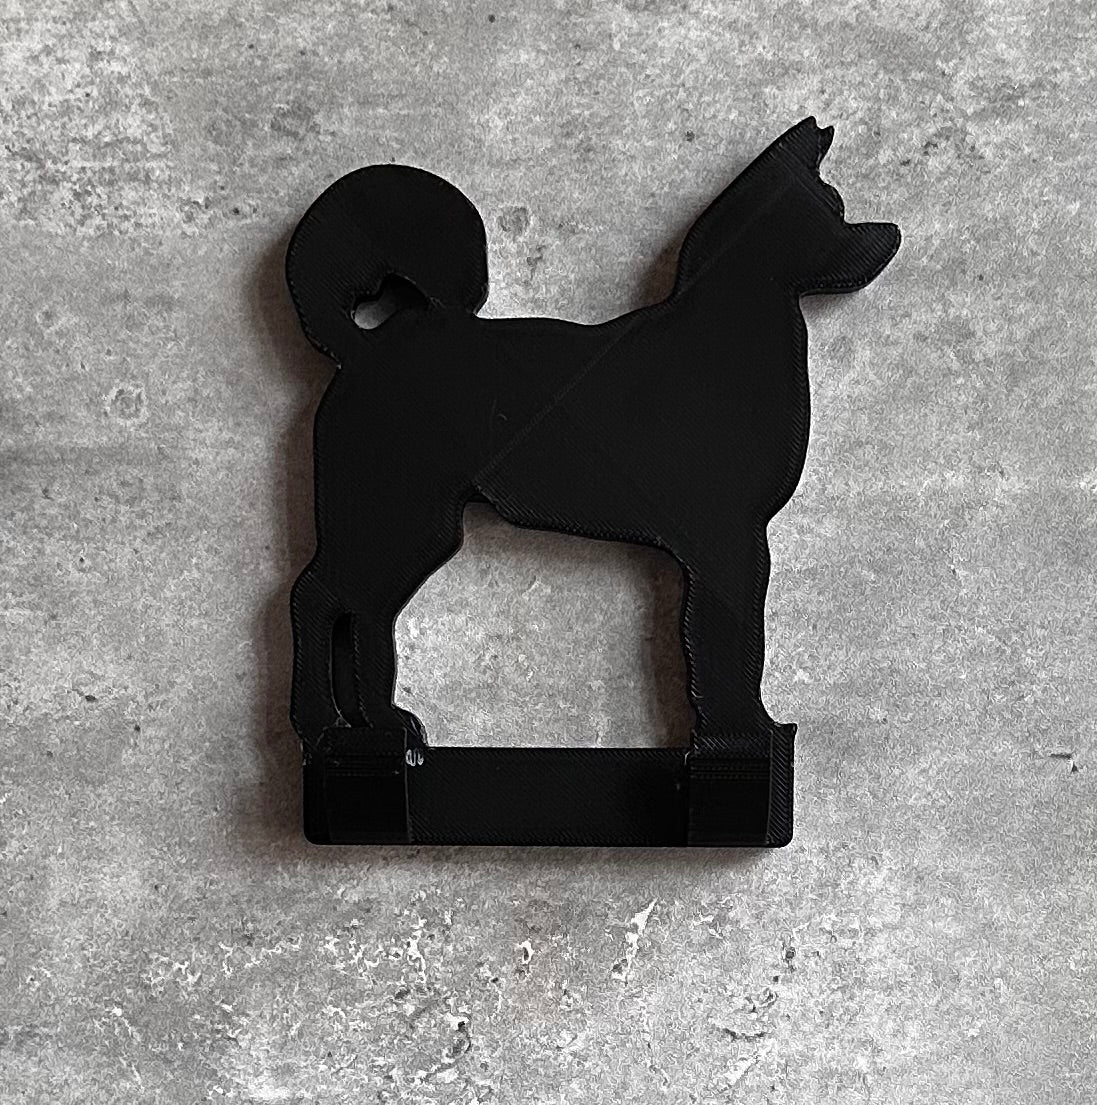 Akita Dog Lead Hook 3D | Akita Dog | Unique Personalised Gifts